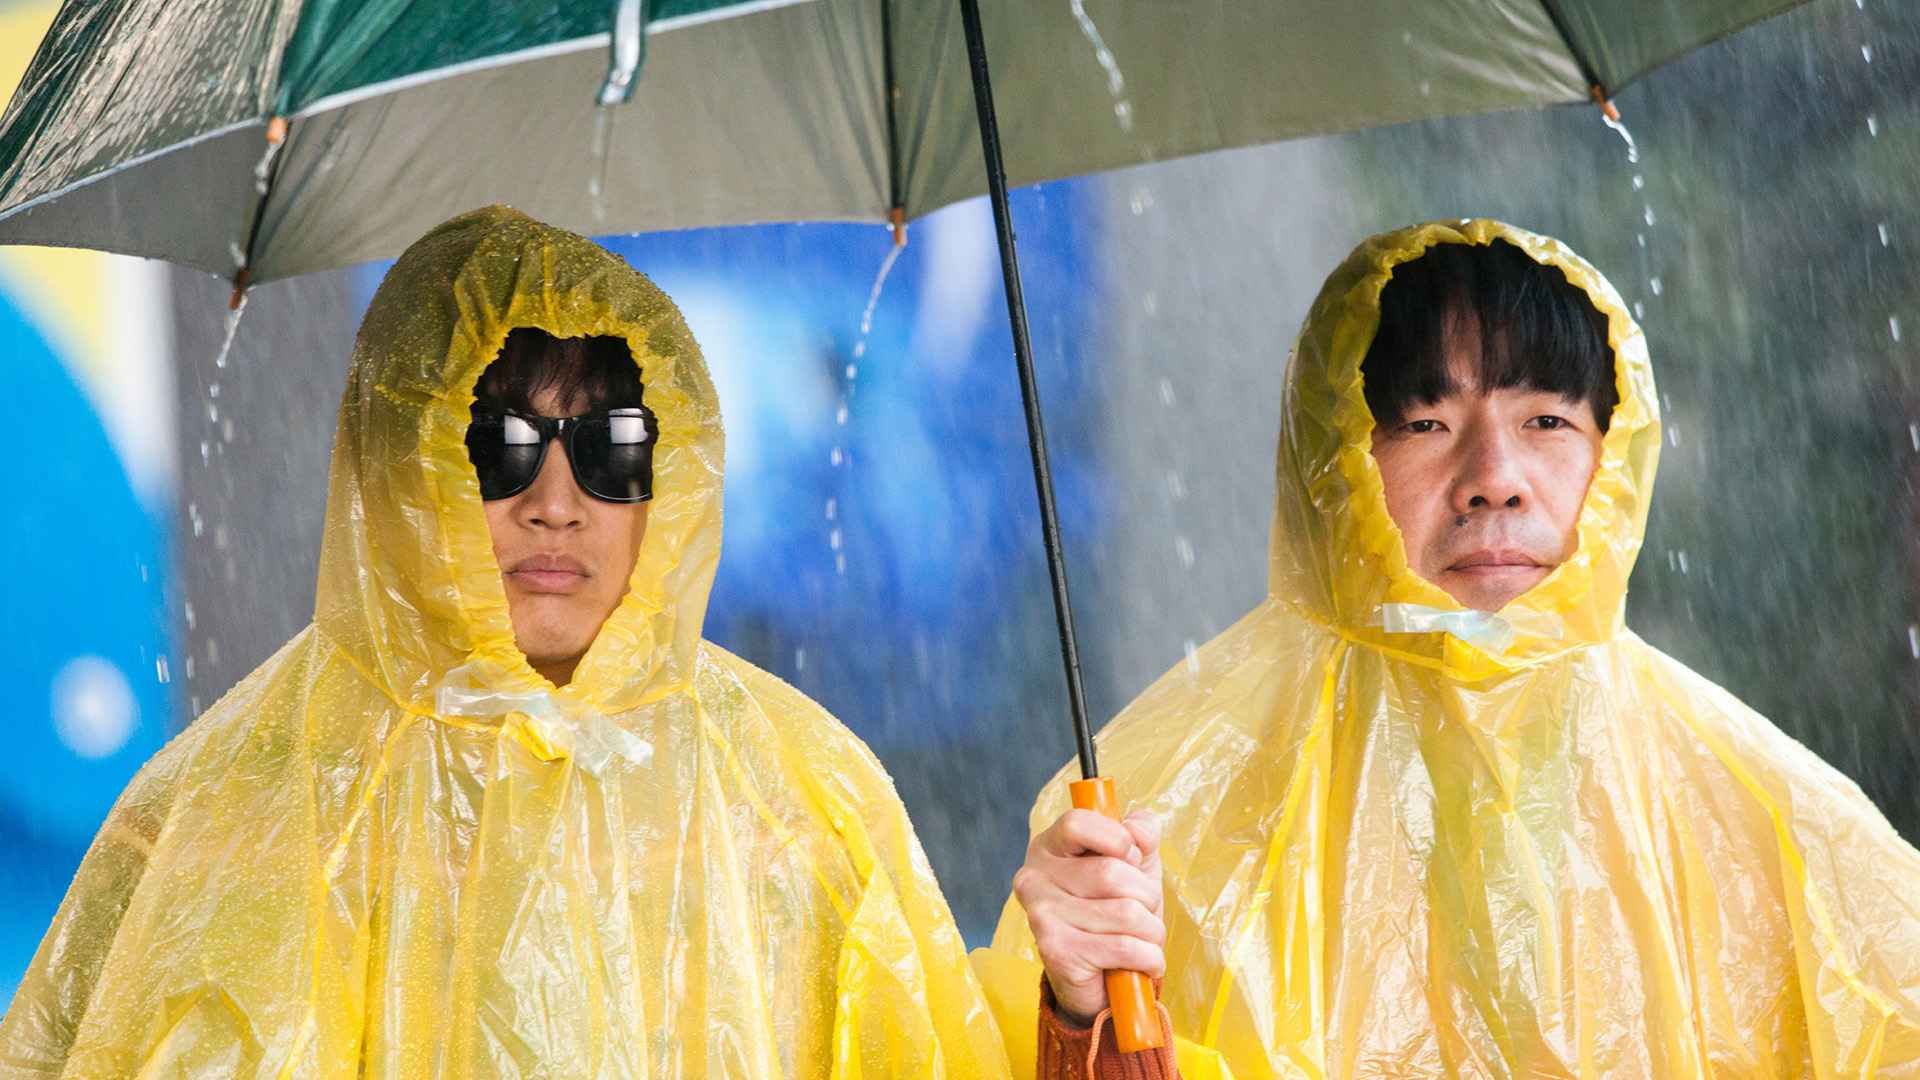 Funny Korean Guys in the rain